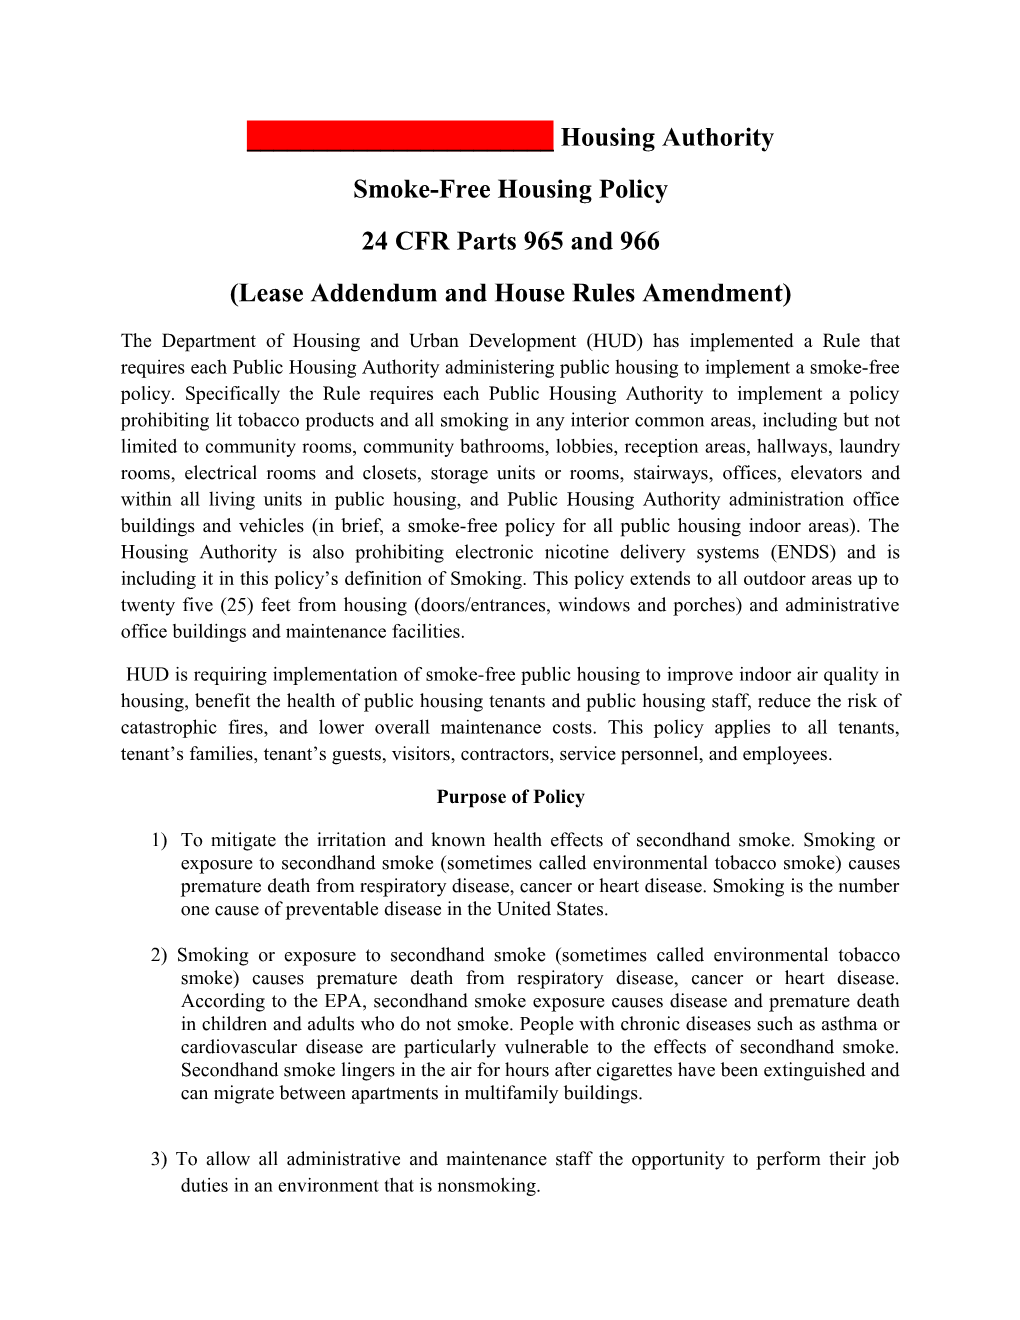 Smoke-Free Housing Policy